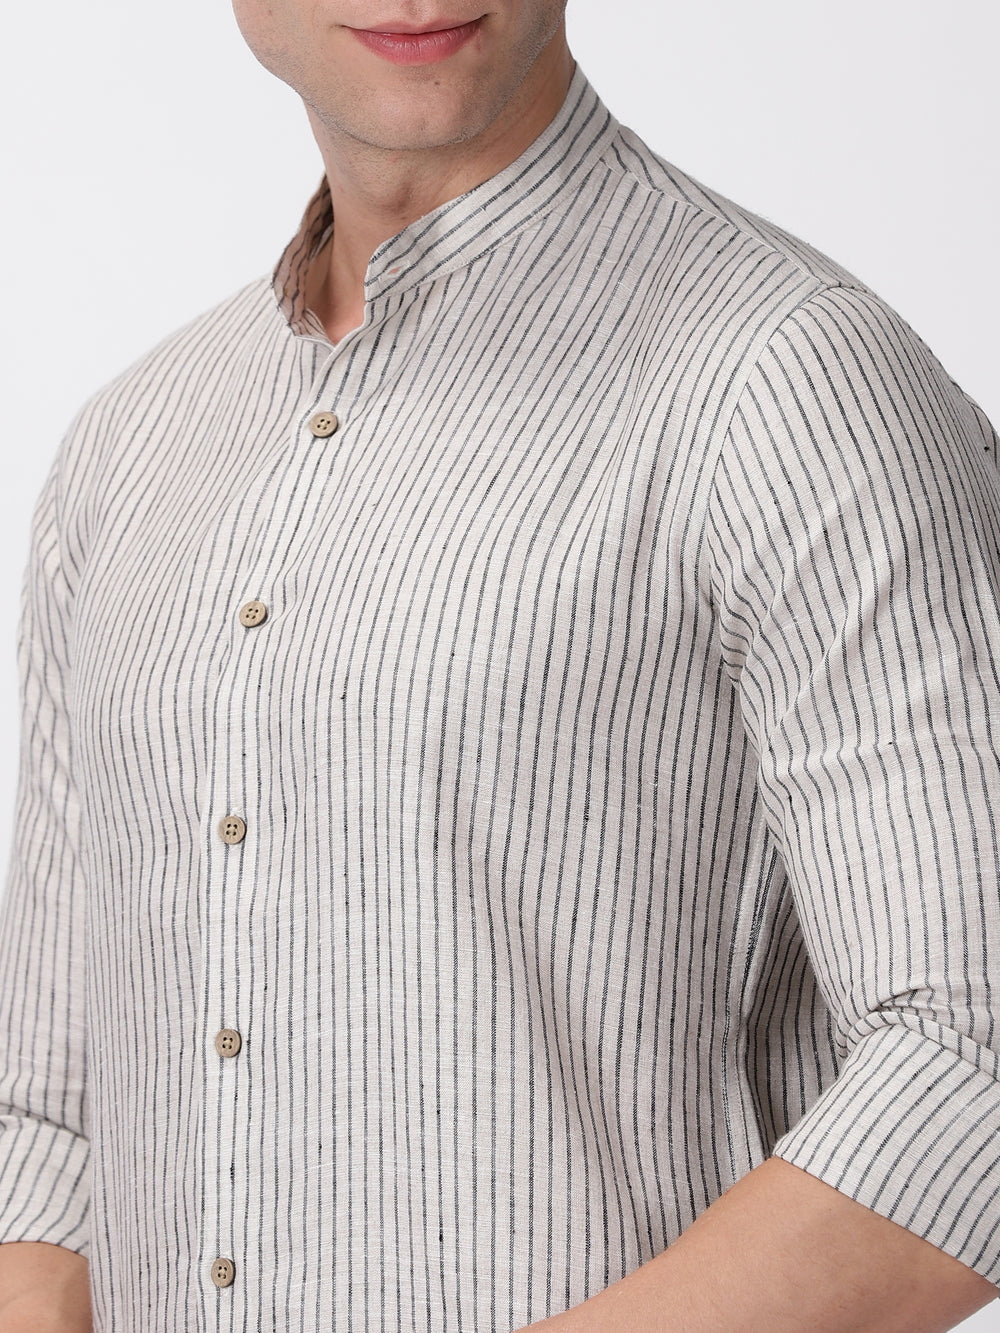 Max - Pure Linen Striped Long Sleeve Shirt - Ecru & Black